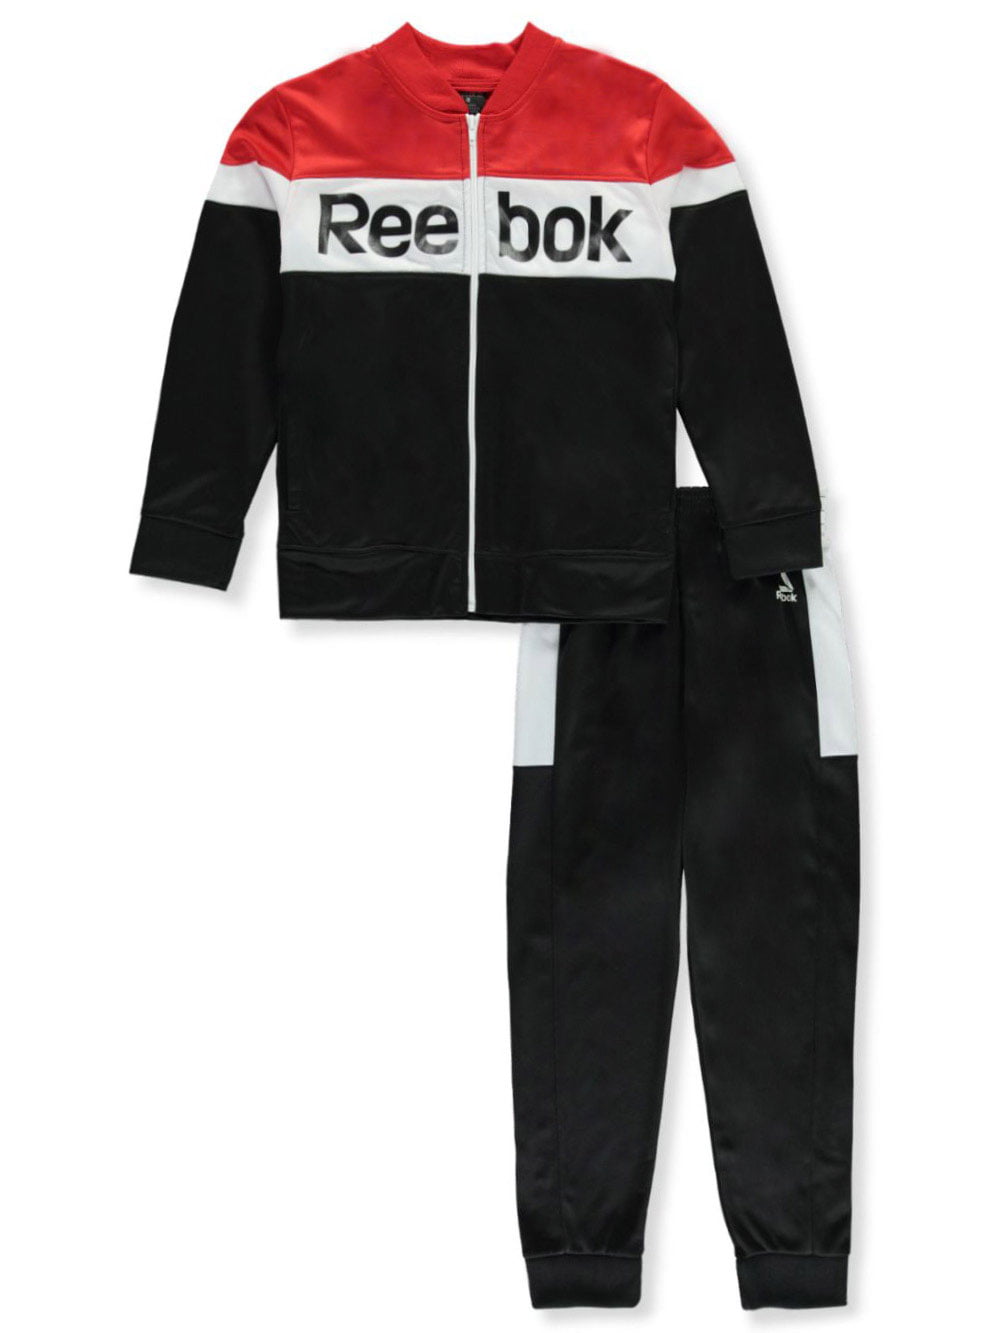 Reebok Boys Colorblocked 2-Piece Sweatsuit Pants Set Outfit